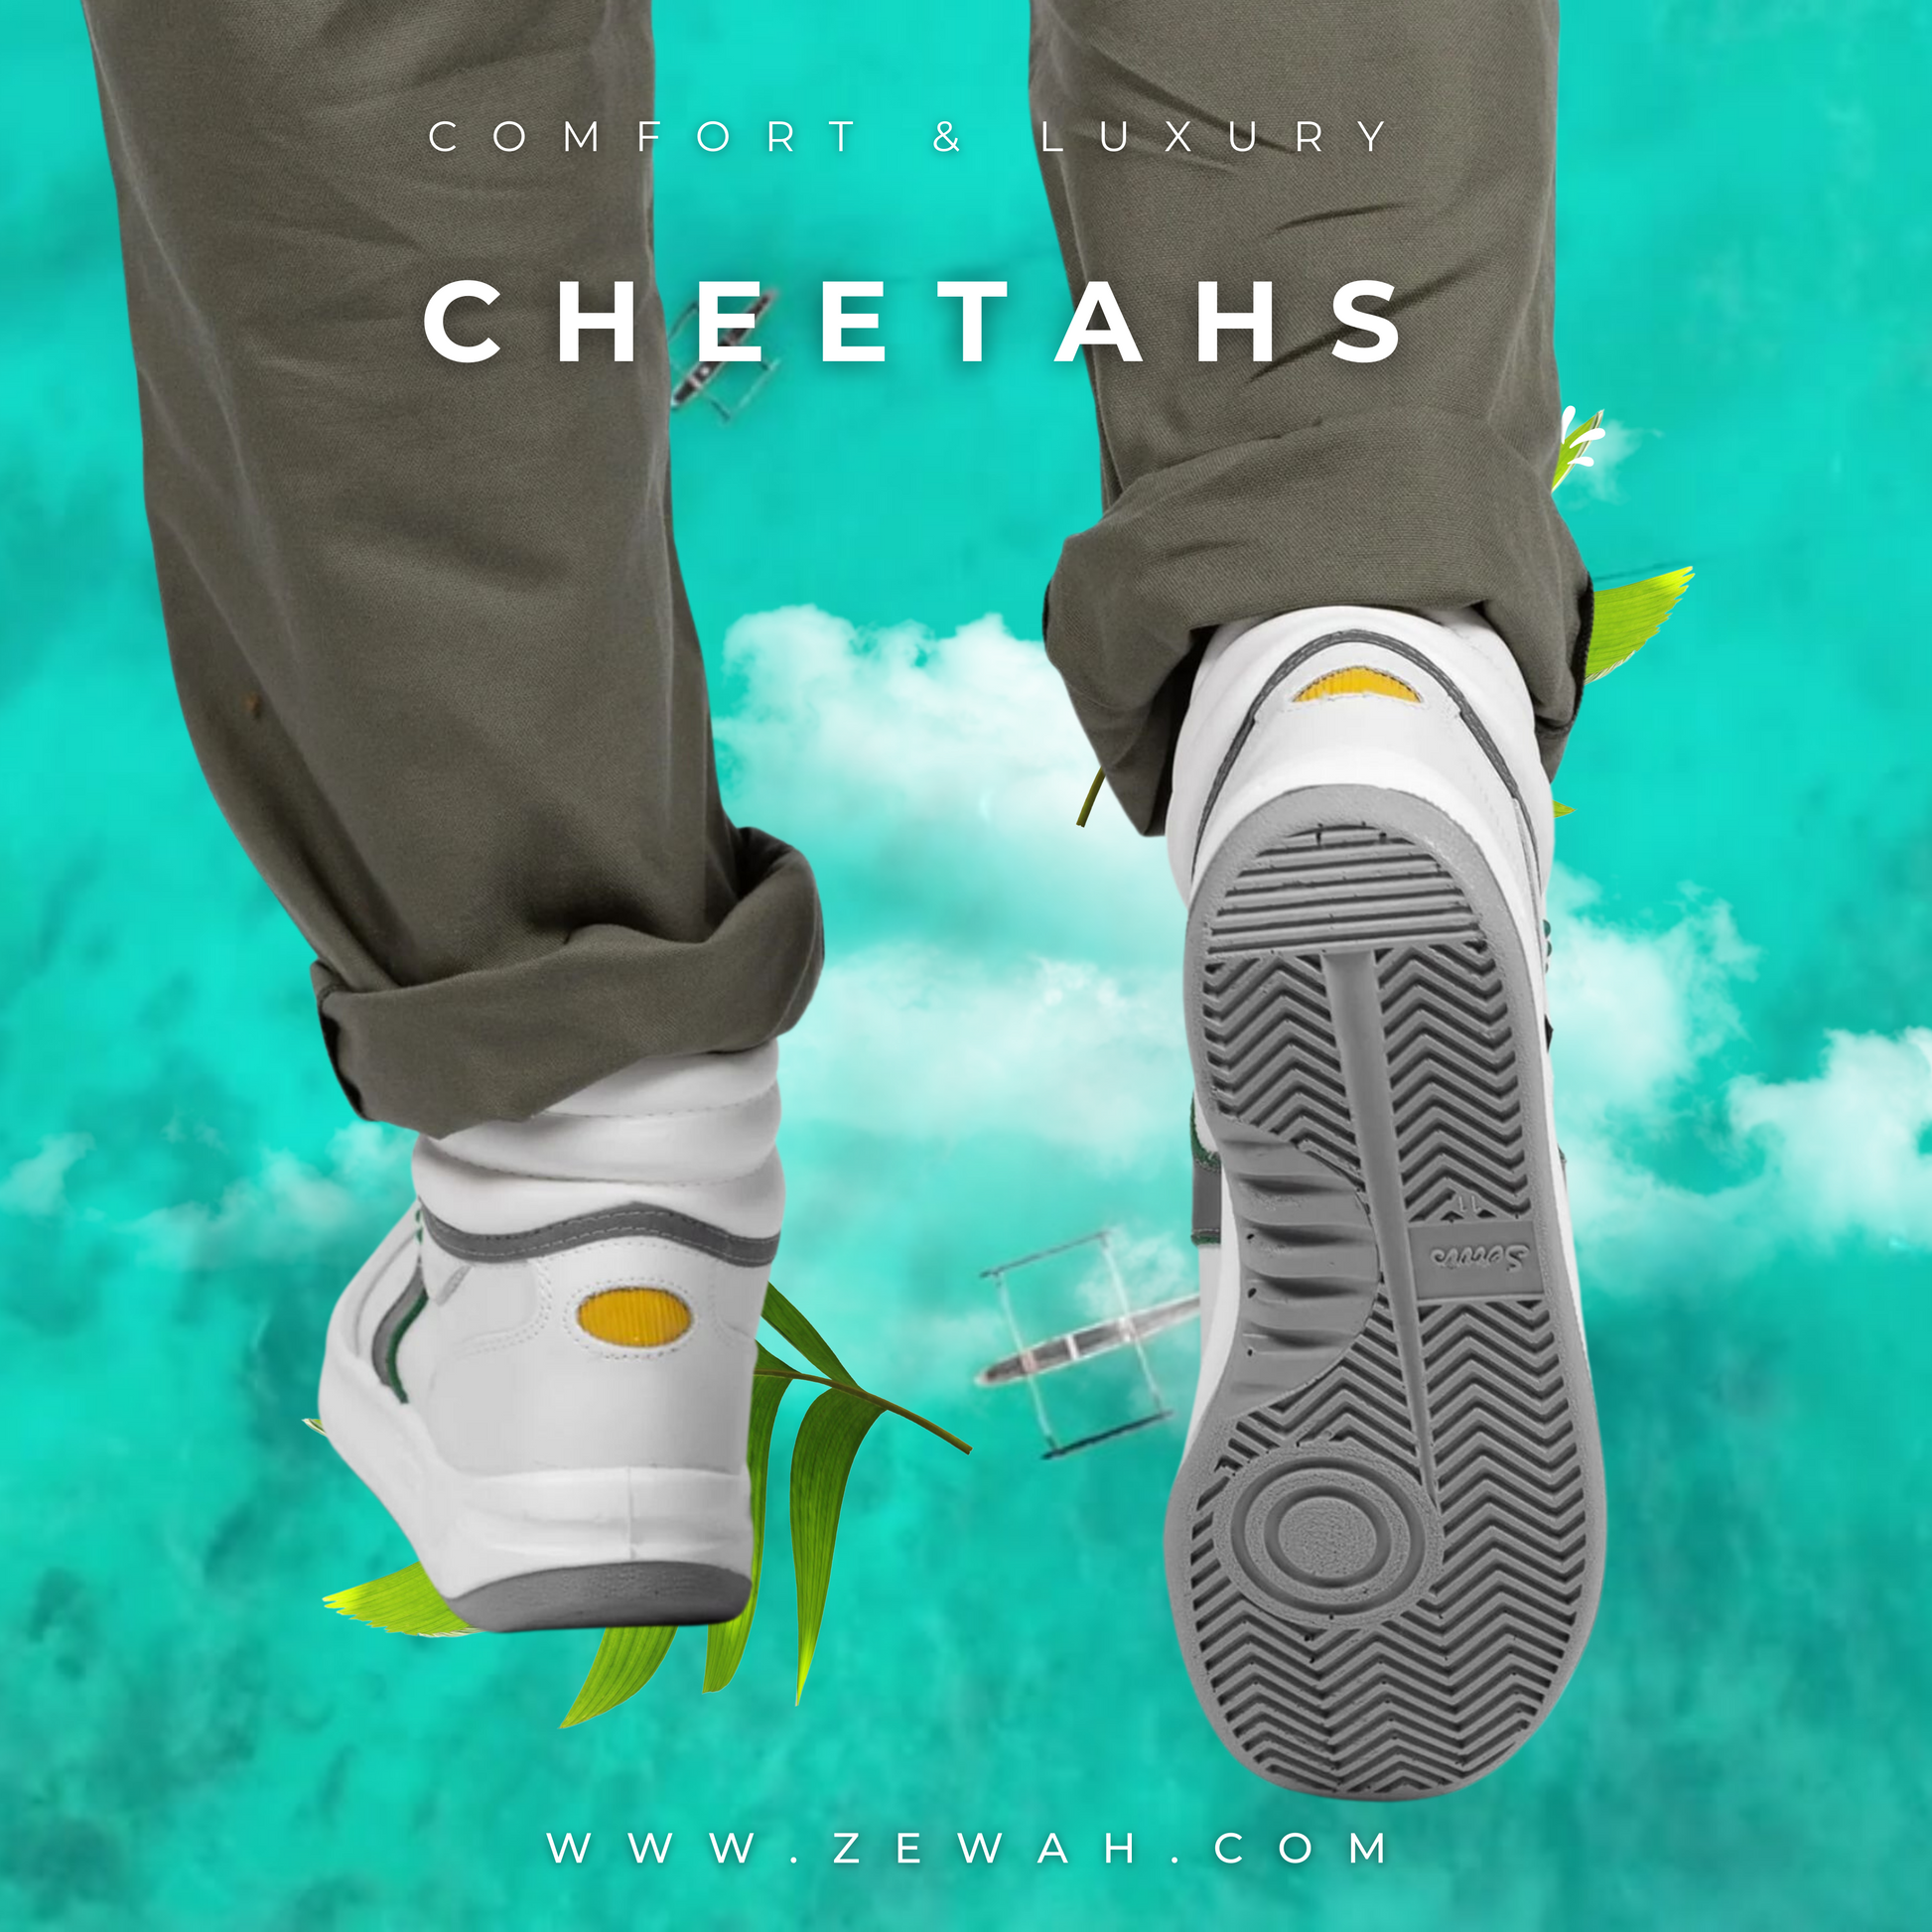 Servis Cheetahs CH-DI-0028 Sports Sneakers For Men CH-DI-0028, CH-DI-0028-Men Athleisure, Combat Boots, servis cheetah, servis cheetah 28, servis cheetah high top shoes, servis cheetah joggers, servis cheetah shoes, Servis Cheetahs  CH-DI-0028-Men Athleisure, Servis Cheetahs CH-DI-0028, Servis Cheetahs CH-DI-0028 Sports Shoes For Men, White Servis Cheetah High Top Sneakers